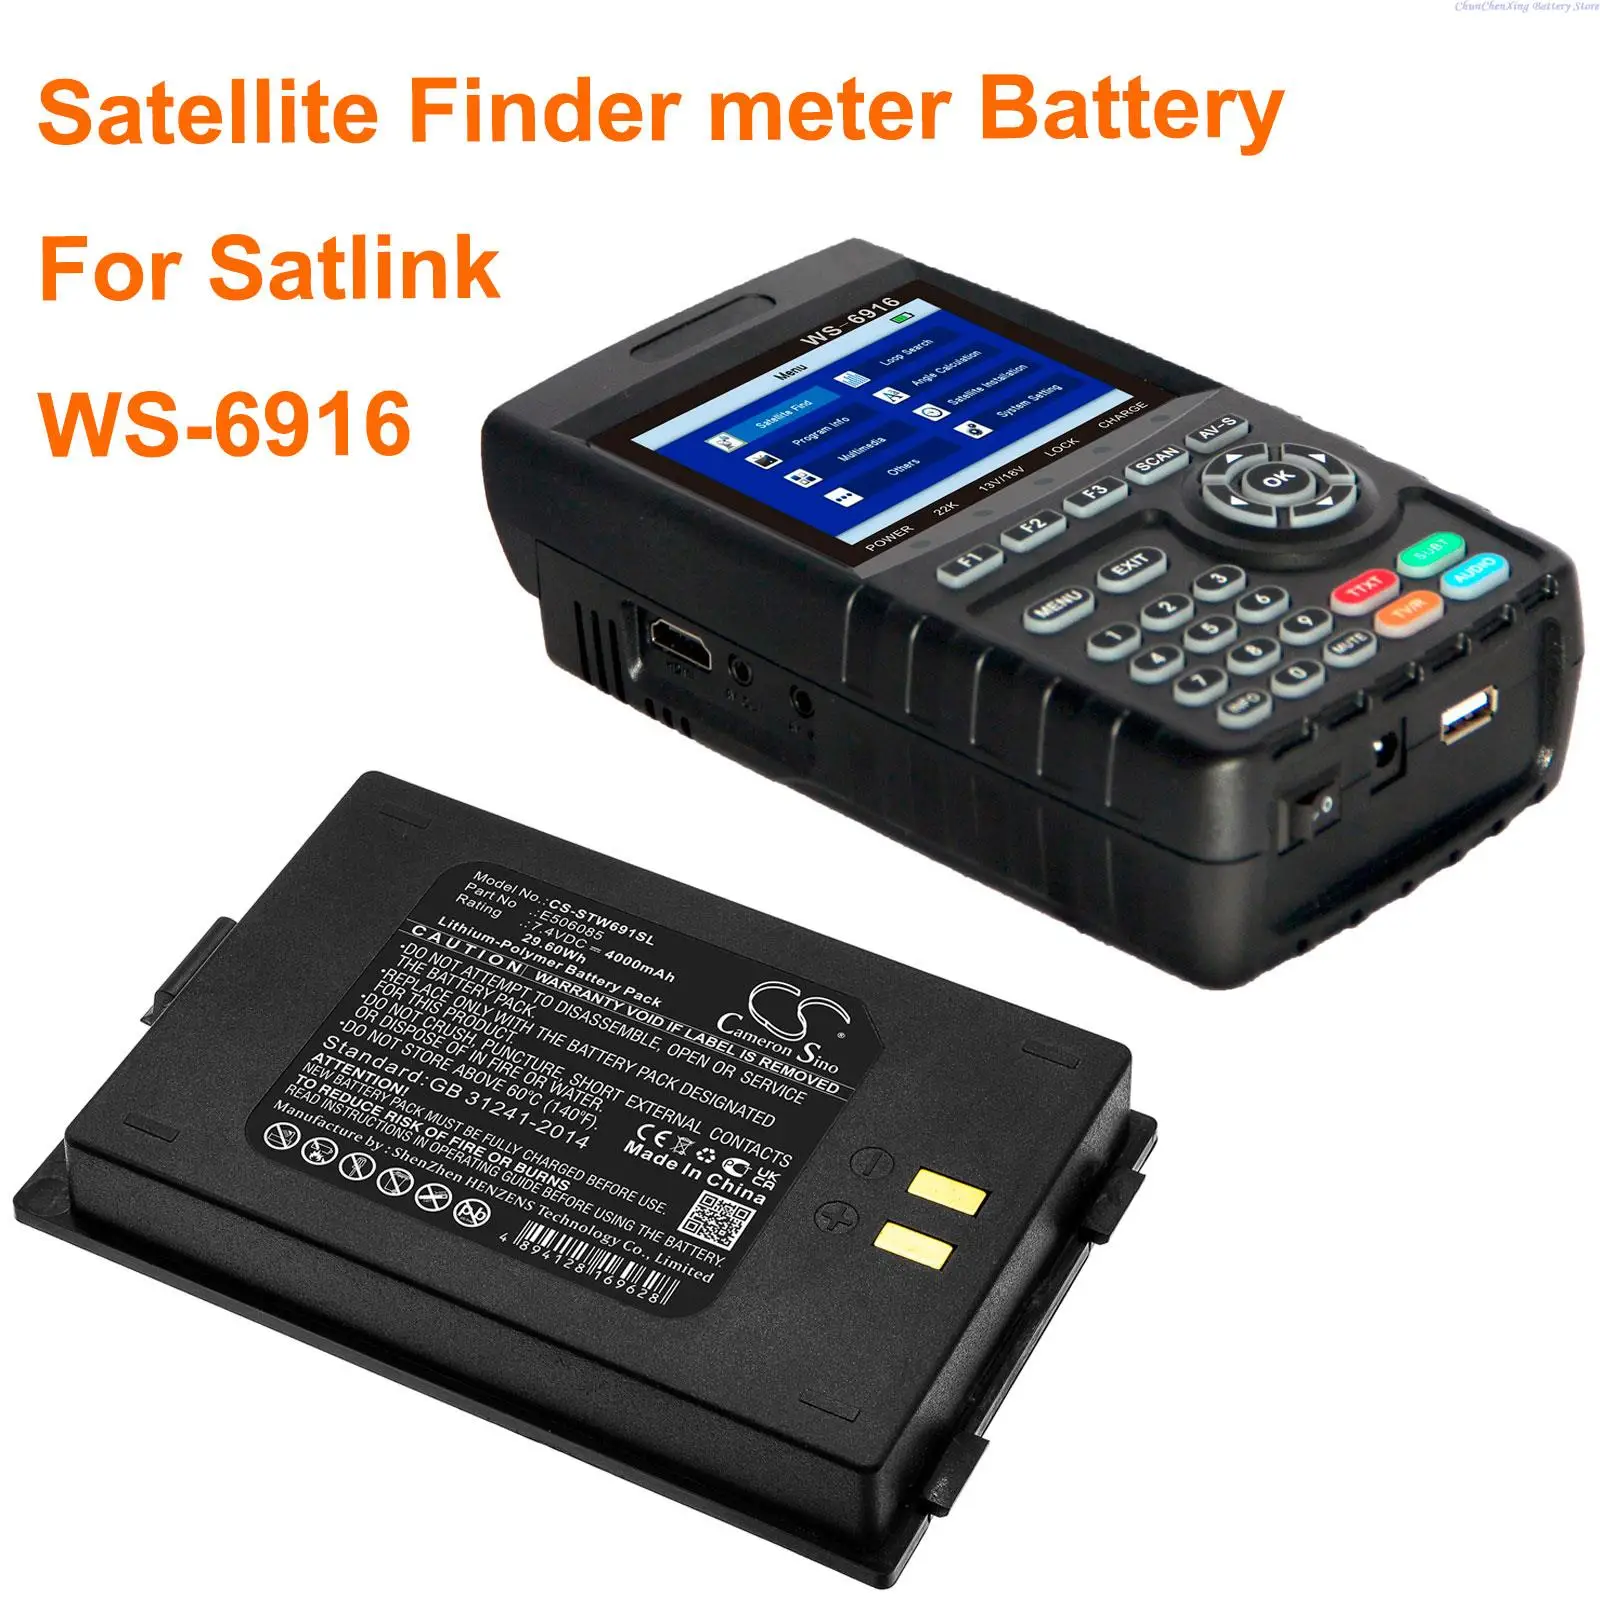 

Cameron Sino 4000mAh Satellite Finder meter Battery E506085 for Satlink WS-6916, WS6916